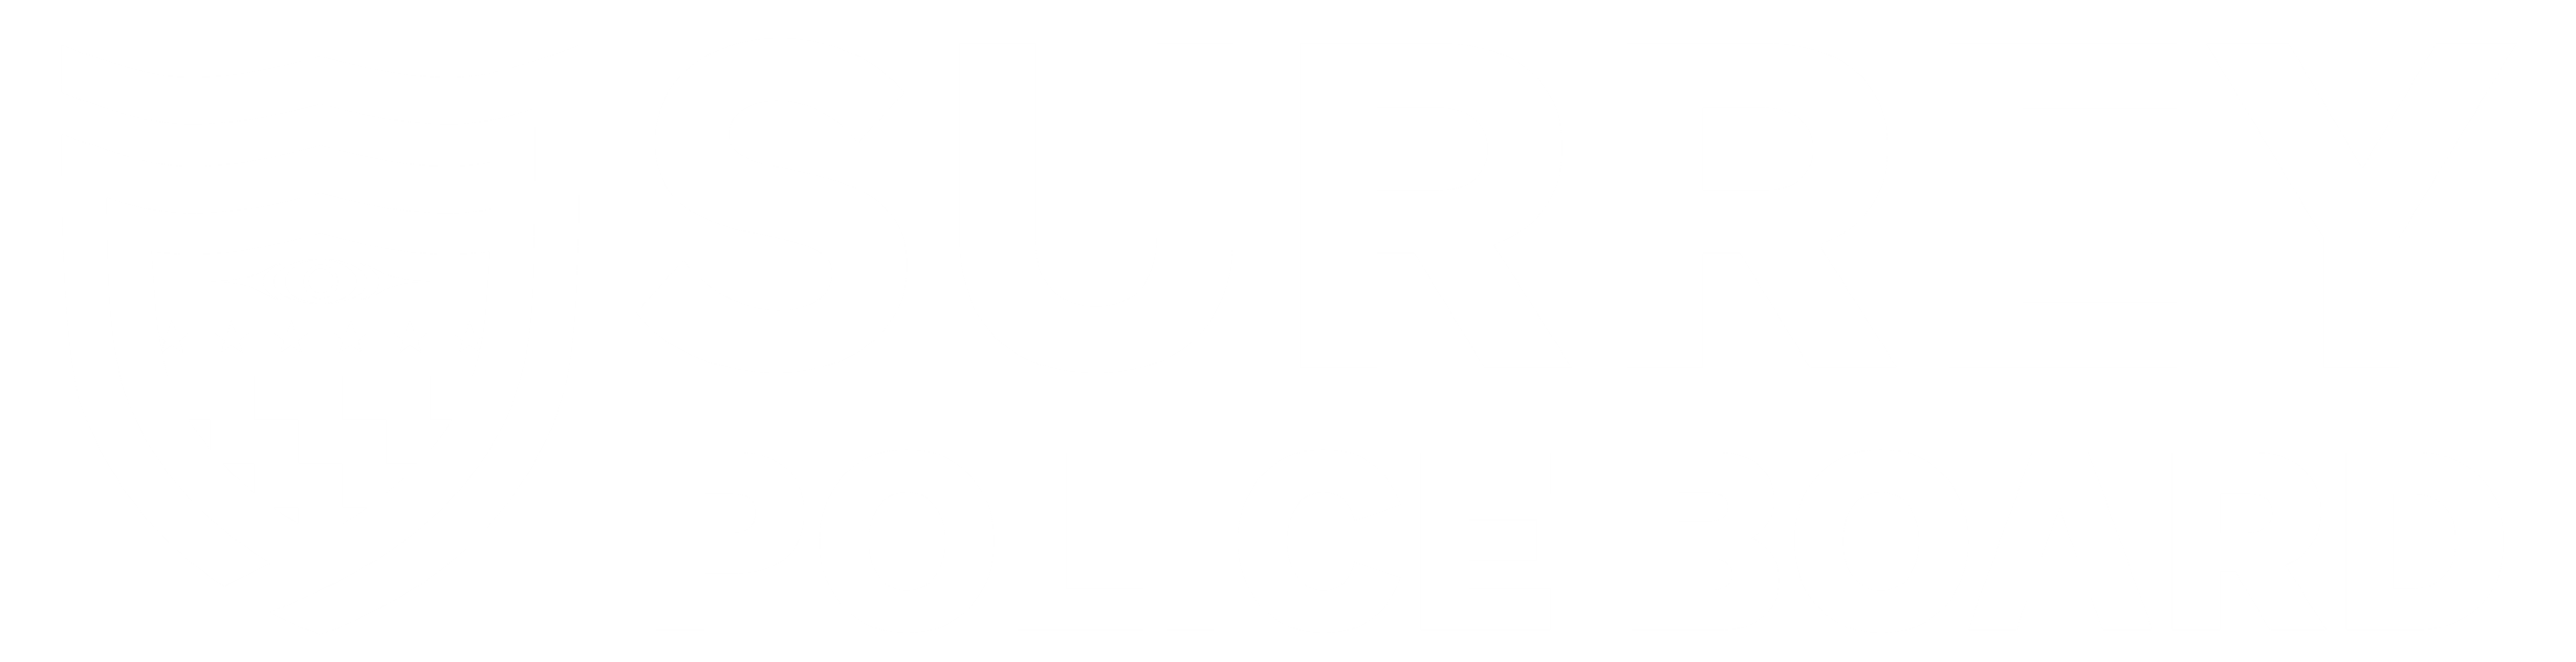 City of Surrey Police Board Logo - Return to homepage